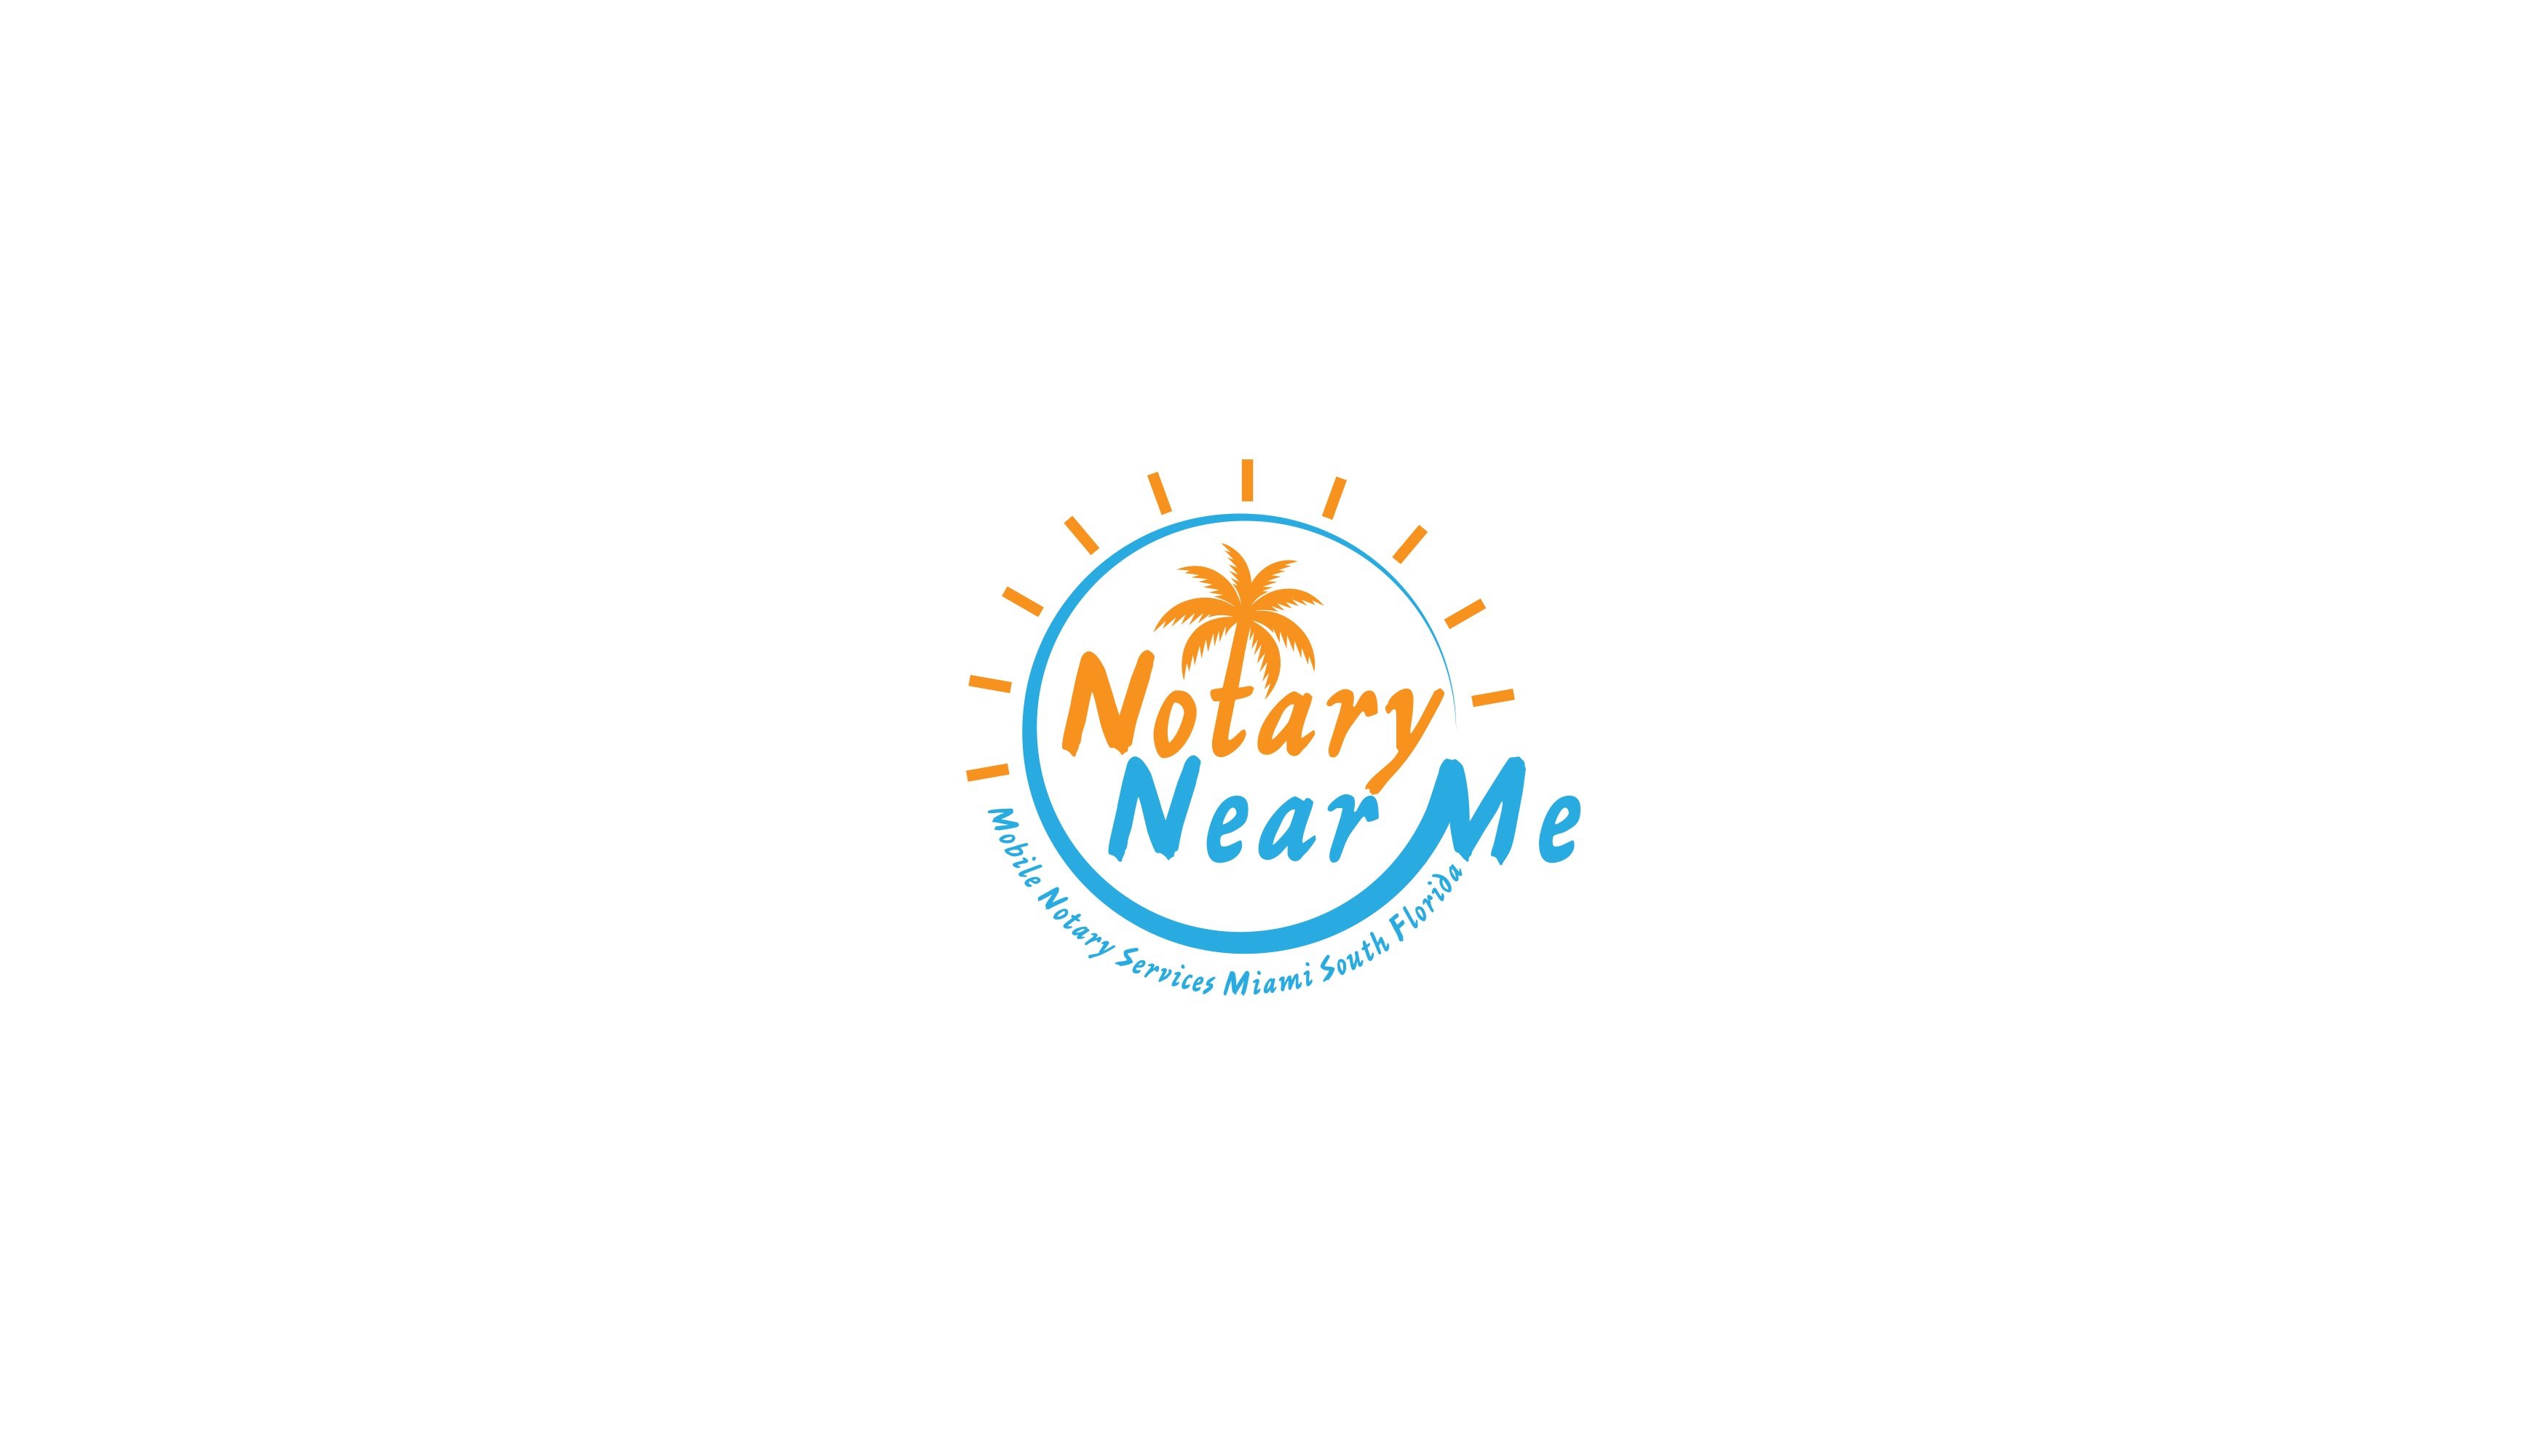 Mobile Notary Miami South Florida cover